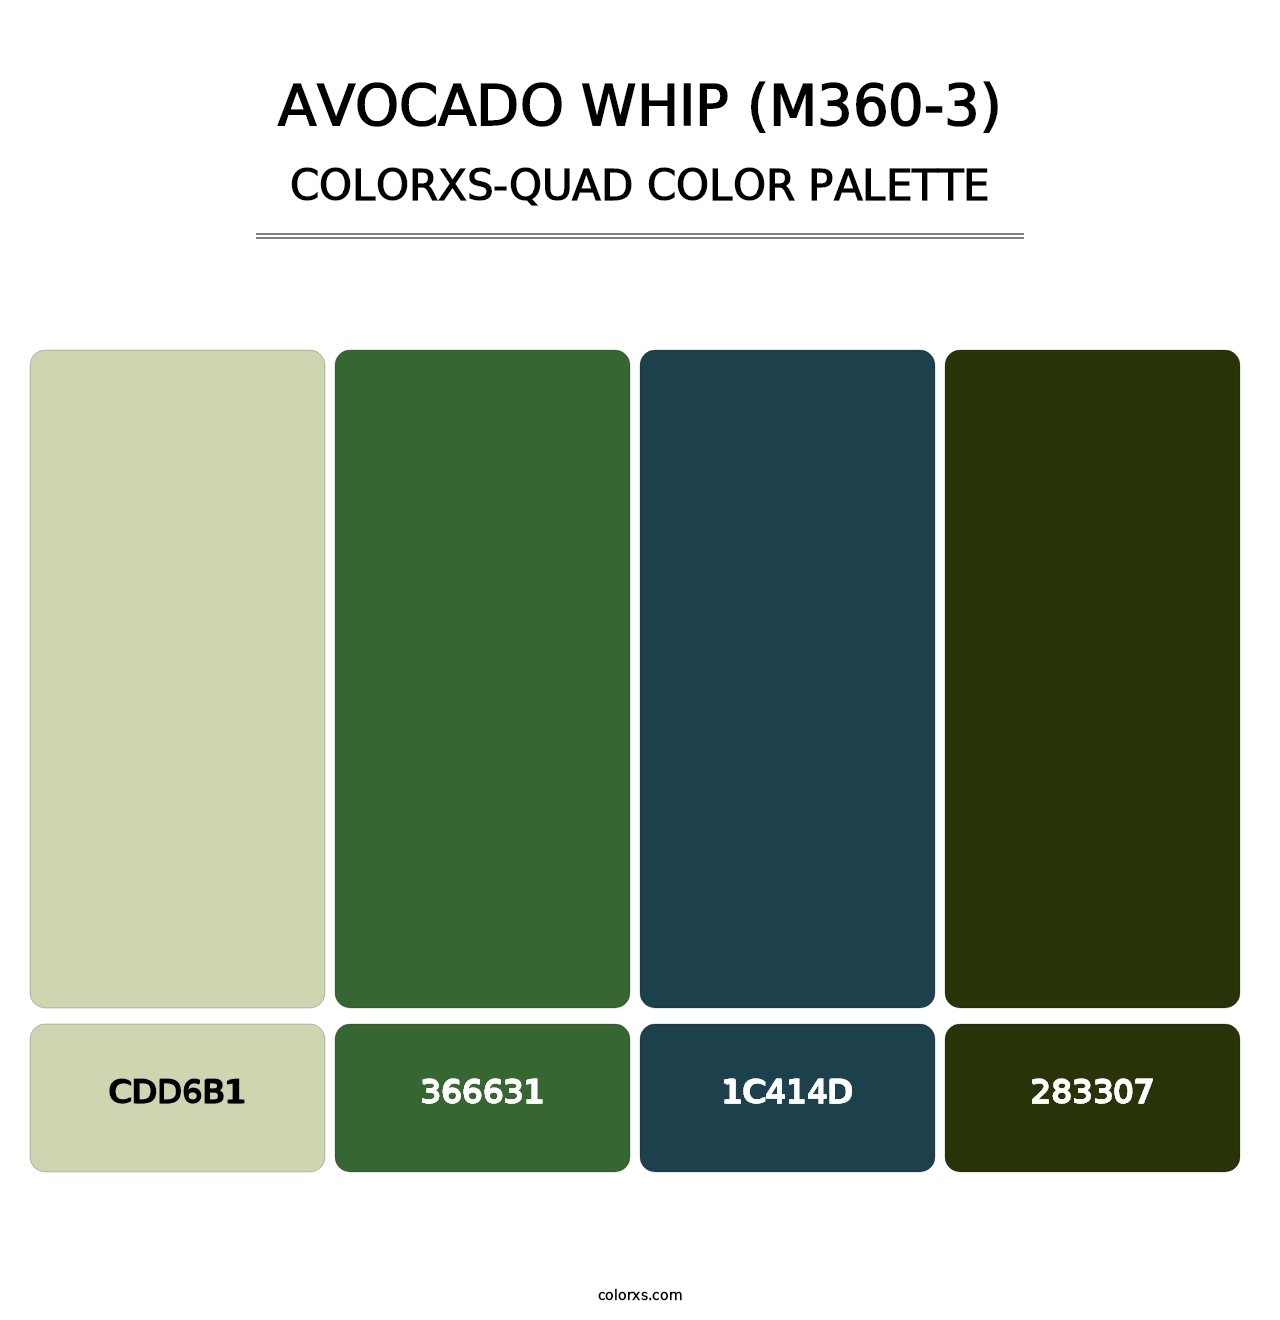 Avocado Whip (M360-3) - Colorxs Quad Palette